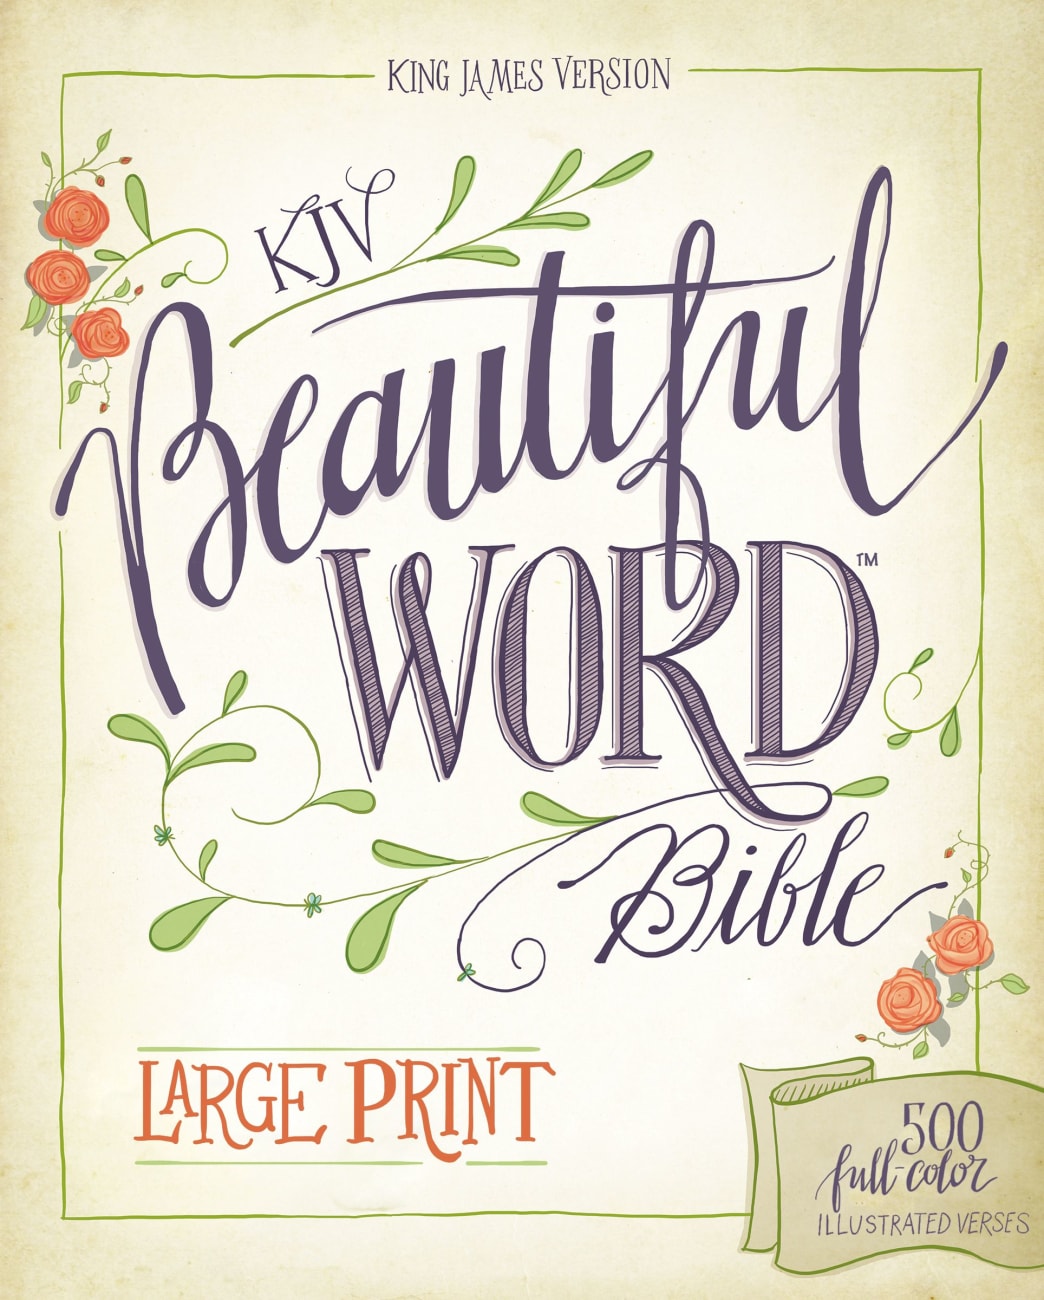 KJV Beautiful Word Bible Large Print 500 Full-Color Illustrated Verses (Red Letter Edition) Hardback